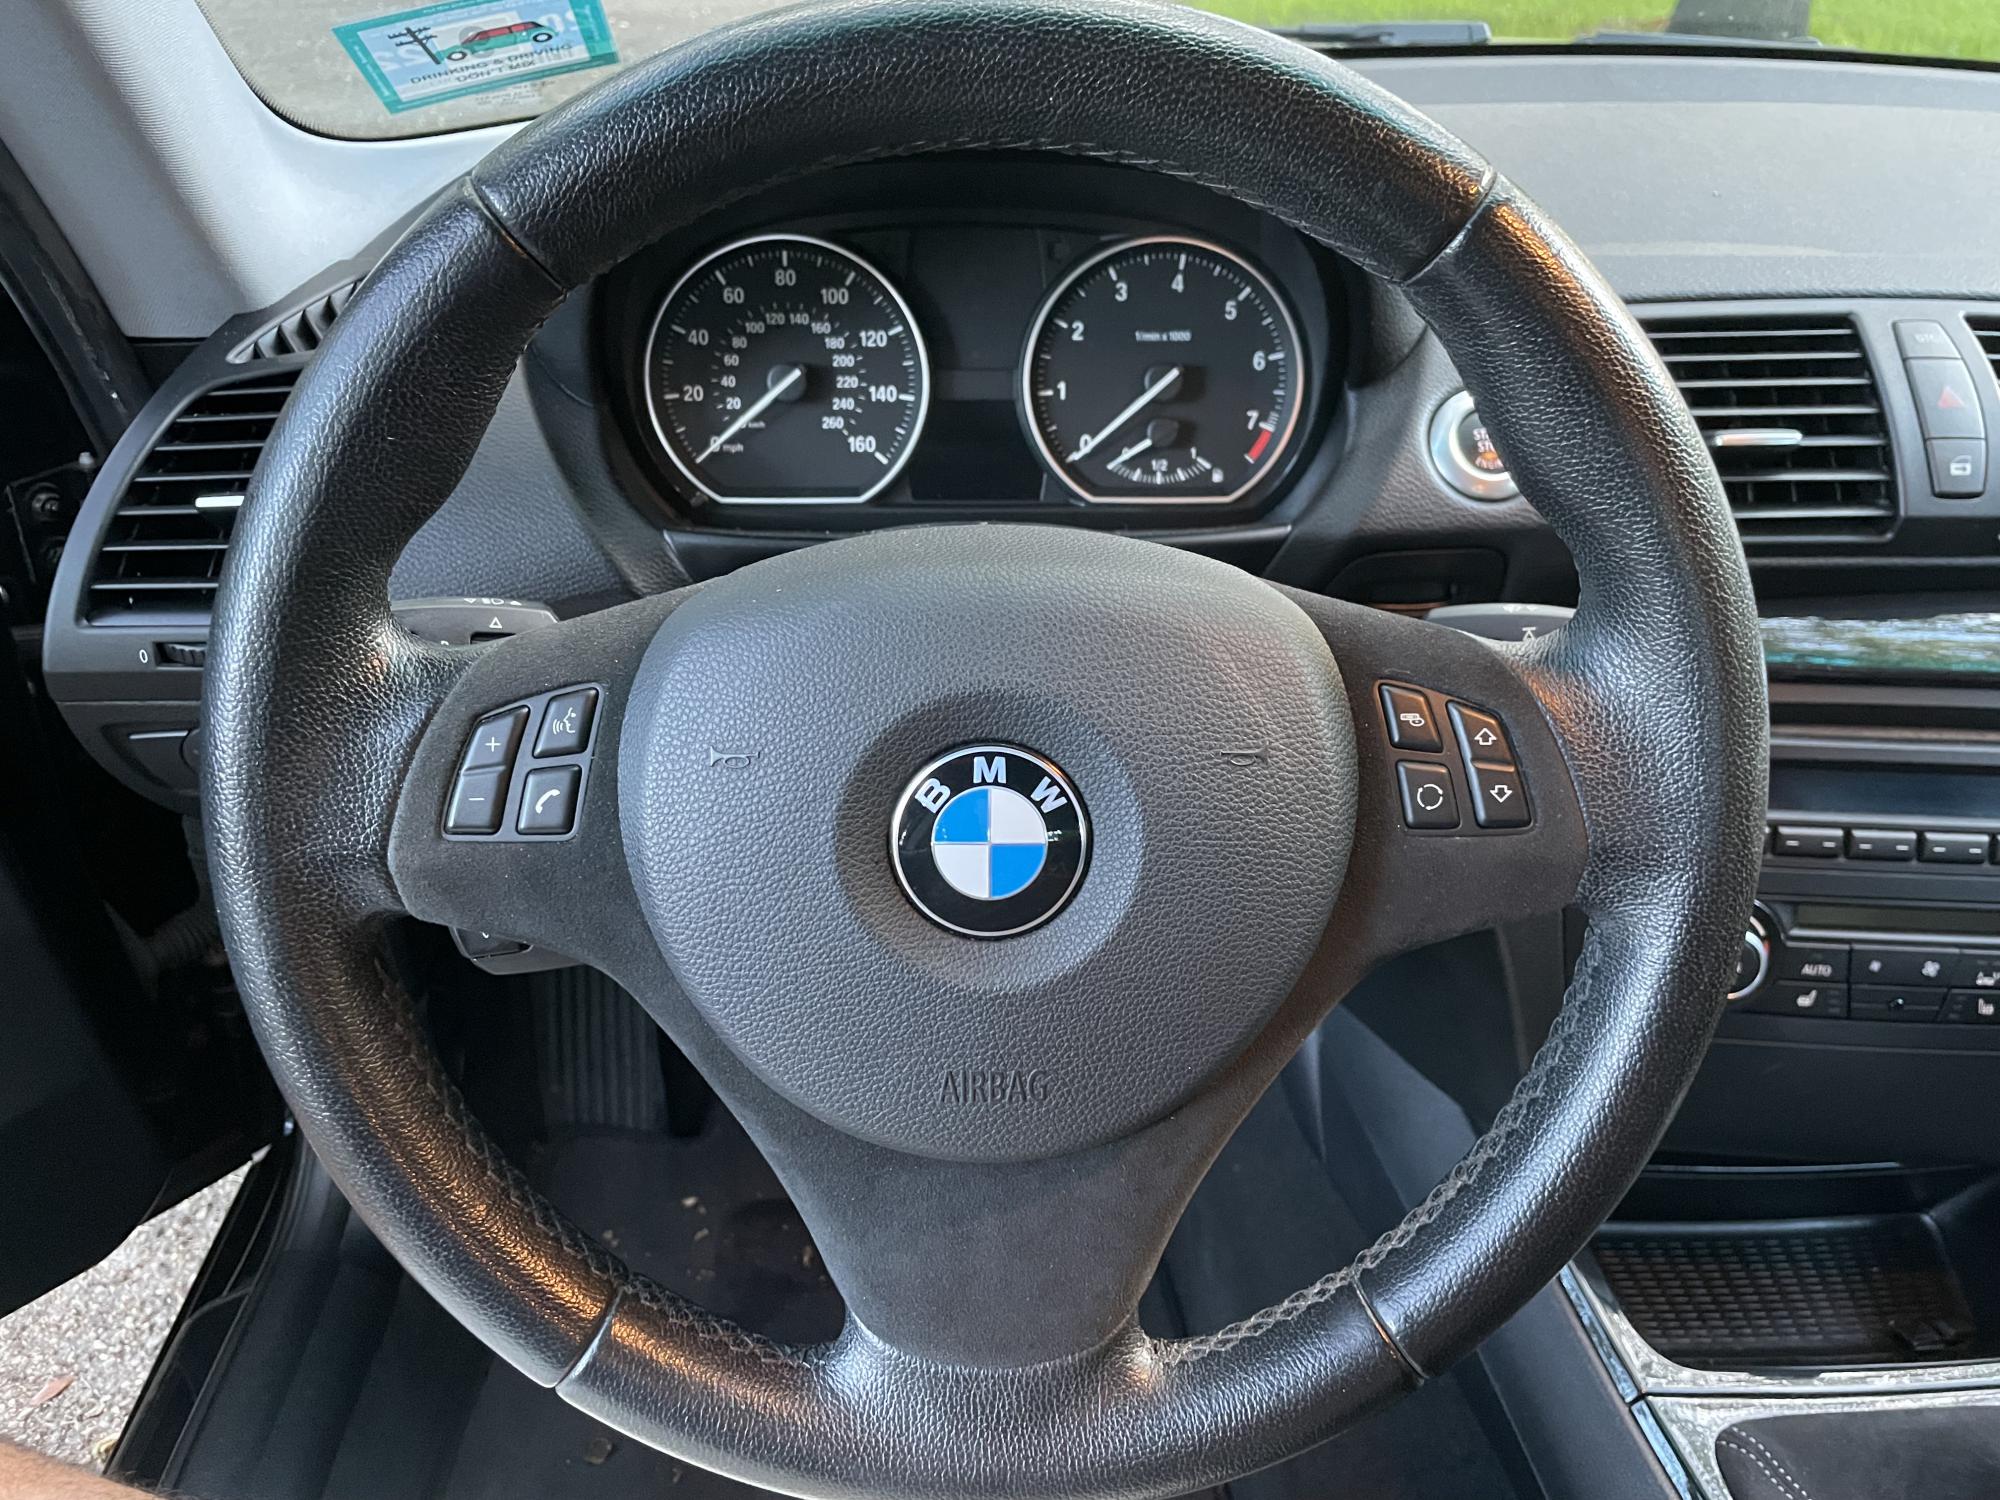 What steering wheel do I have? - BMW 1 Series Coupe 1 Series Forum (1M / tii / 135i / 128i Coupe / Cabrio / Hatchback) (BMW E82 E88 128i 130i 135i)